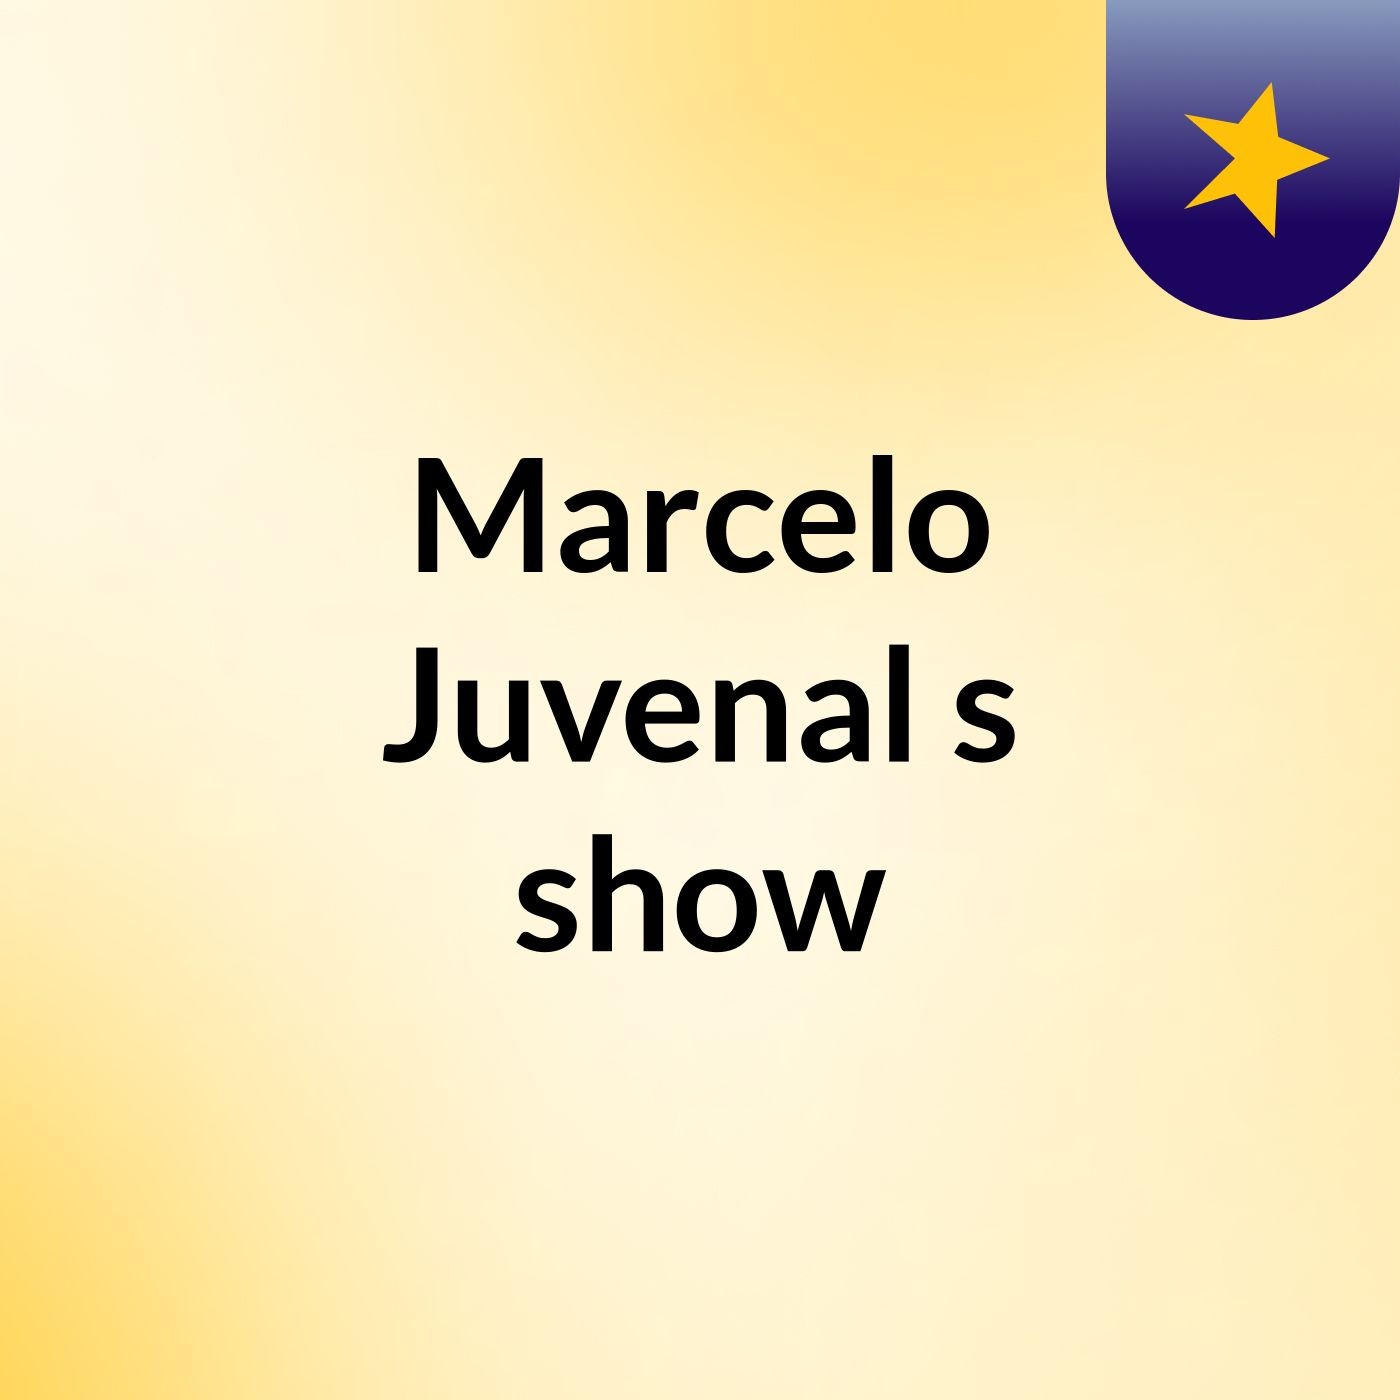 Marcelo Juvenal's show